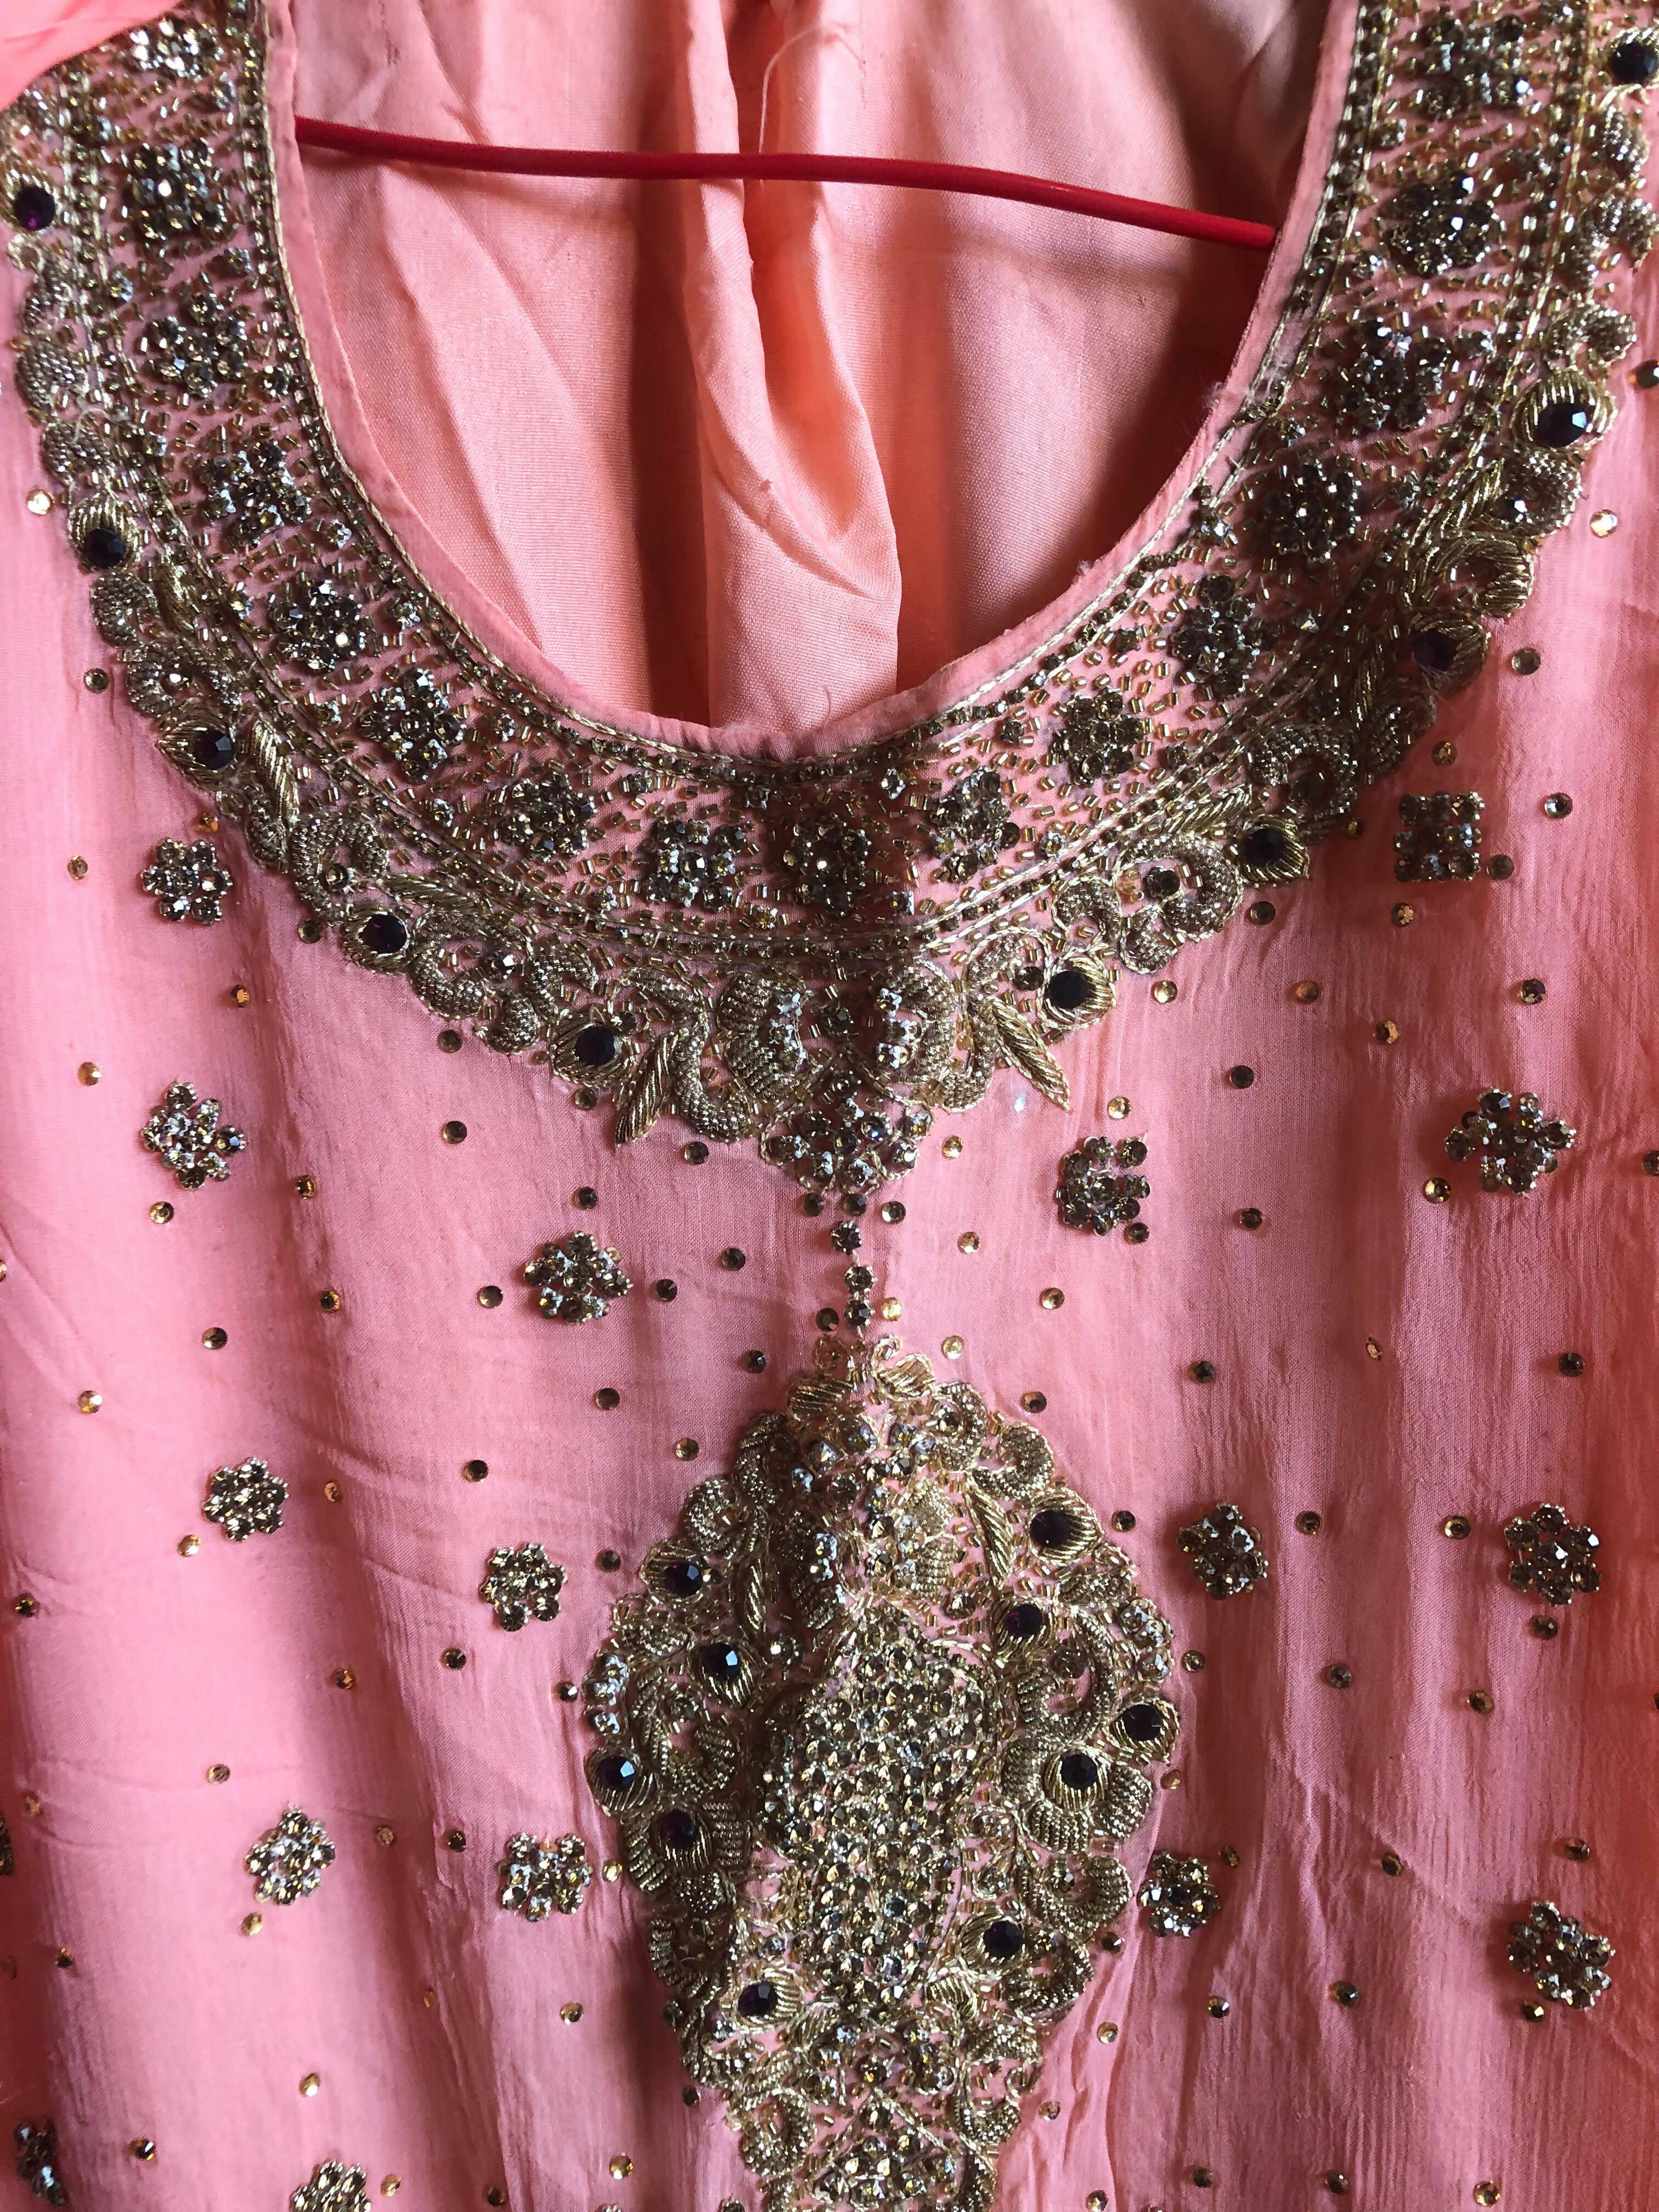 Fancy Pink Suit (Size: M ) | Women Kurta| Preoved